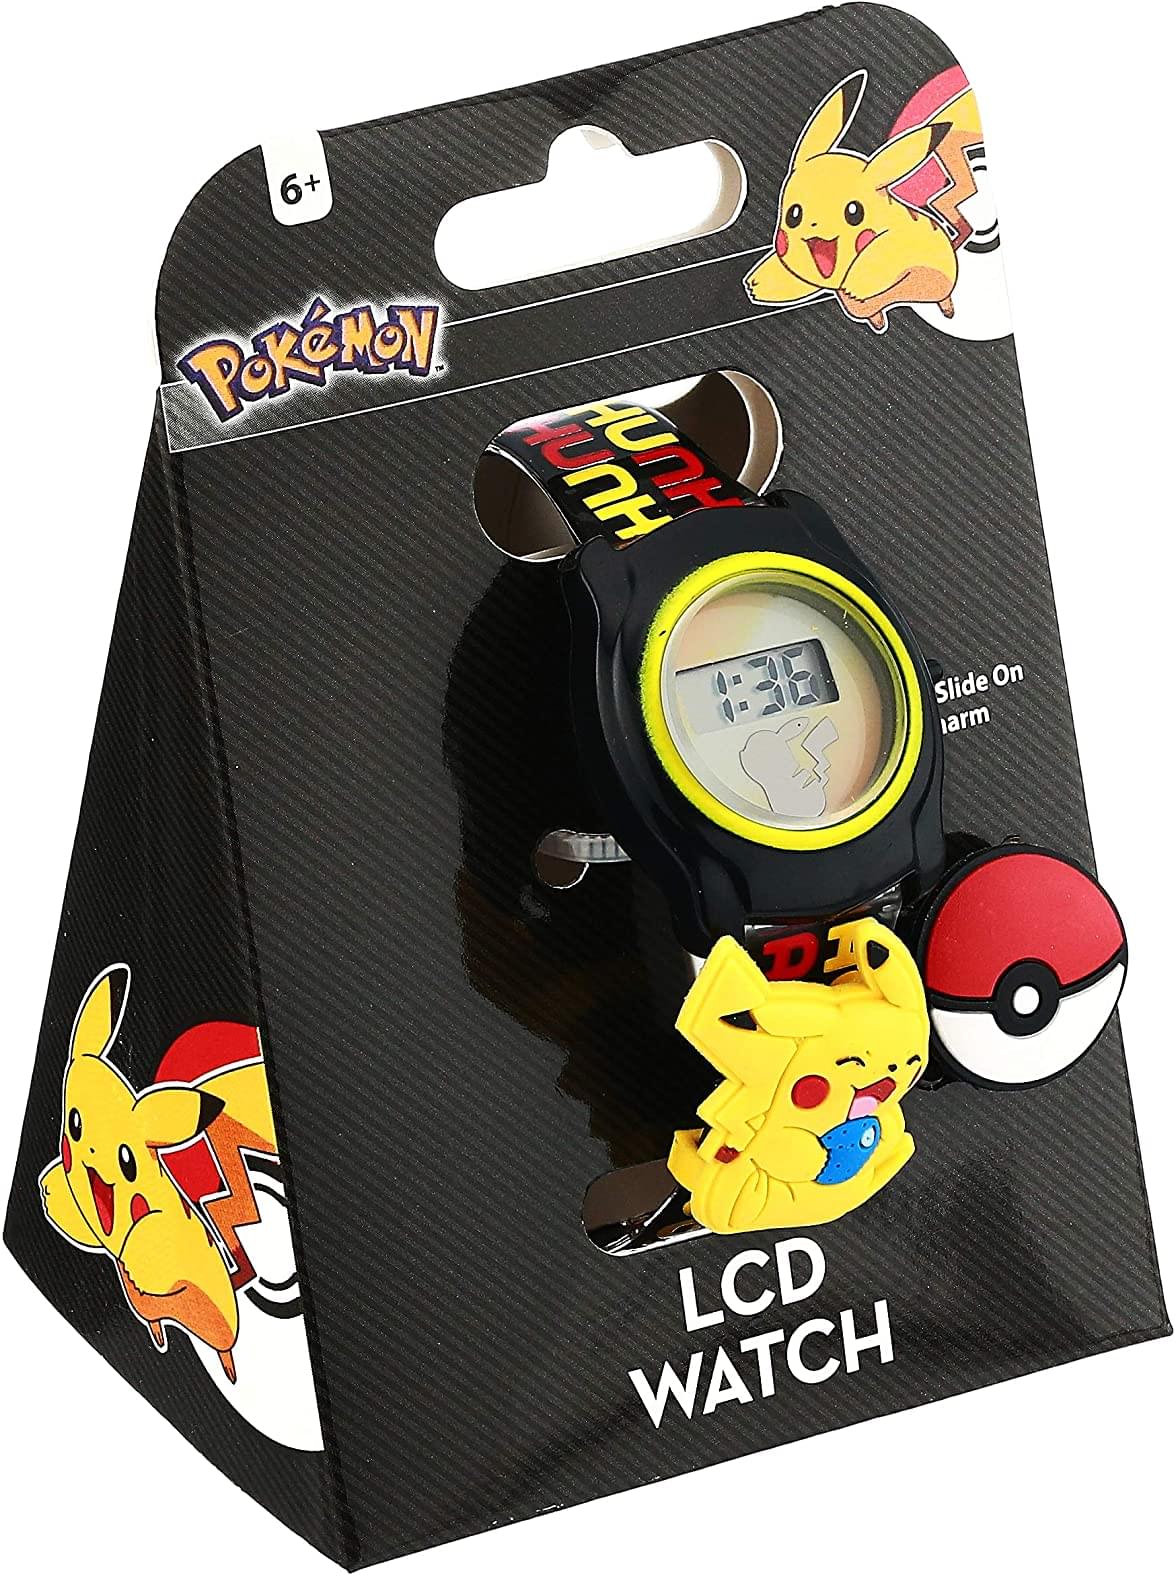 Pokemon Pikachu Pokeball LCD Watch w/ Slide-on Charms